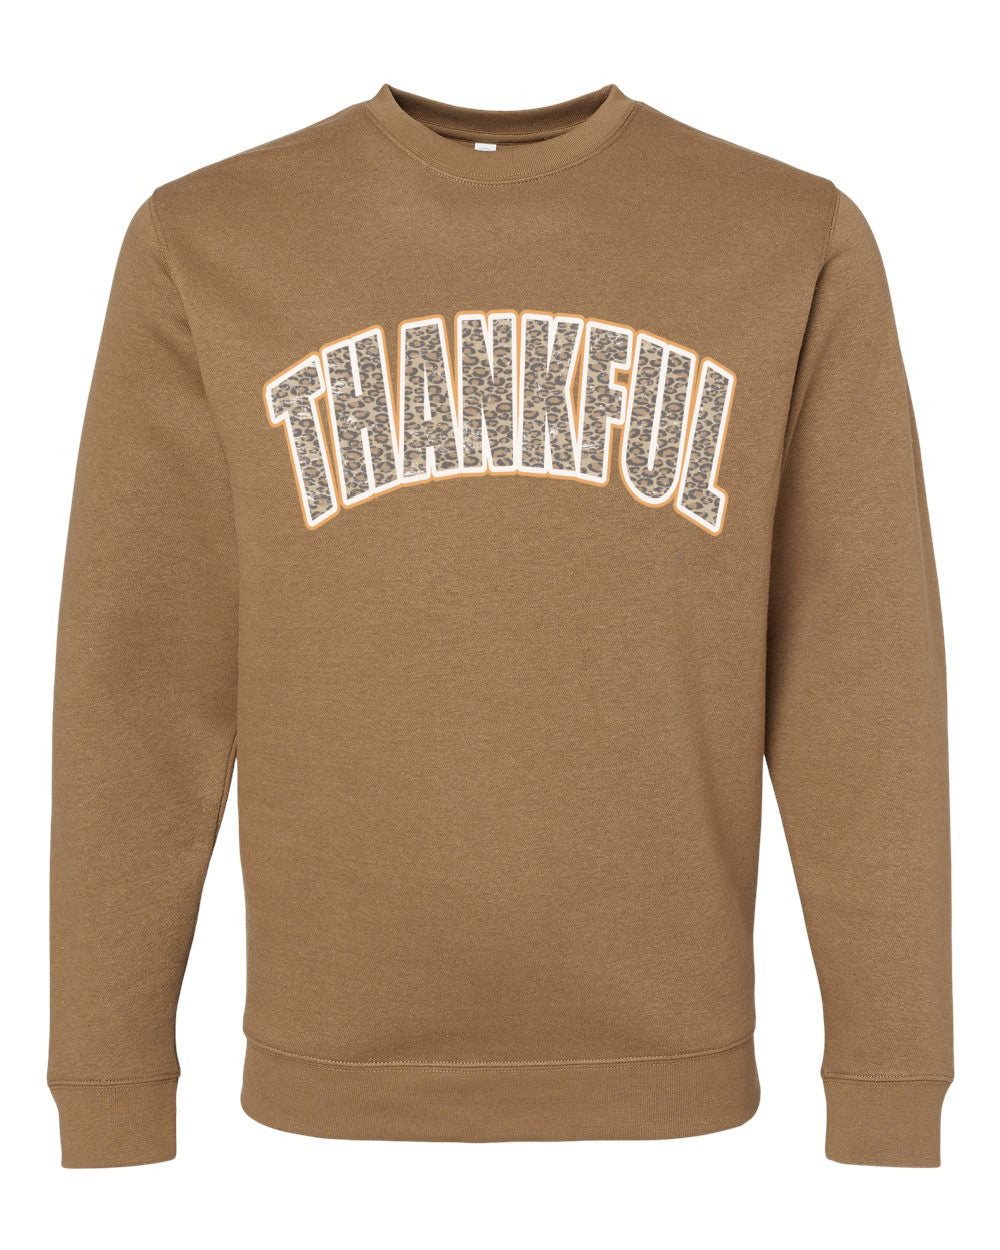 LAT Toasty Brown  Leopard Thankful Fall Sweatshirts/ Unisex sized Sweatshirts/ DTG printed Quality Sweatshirts